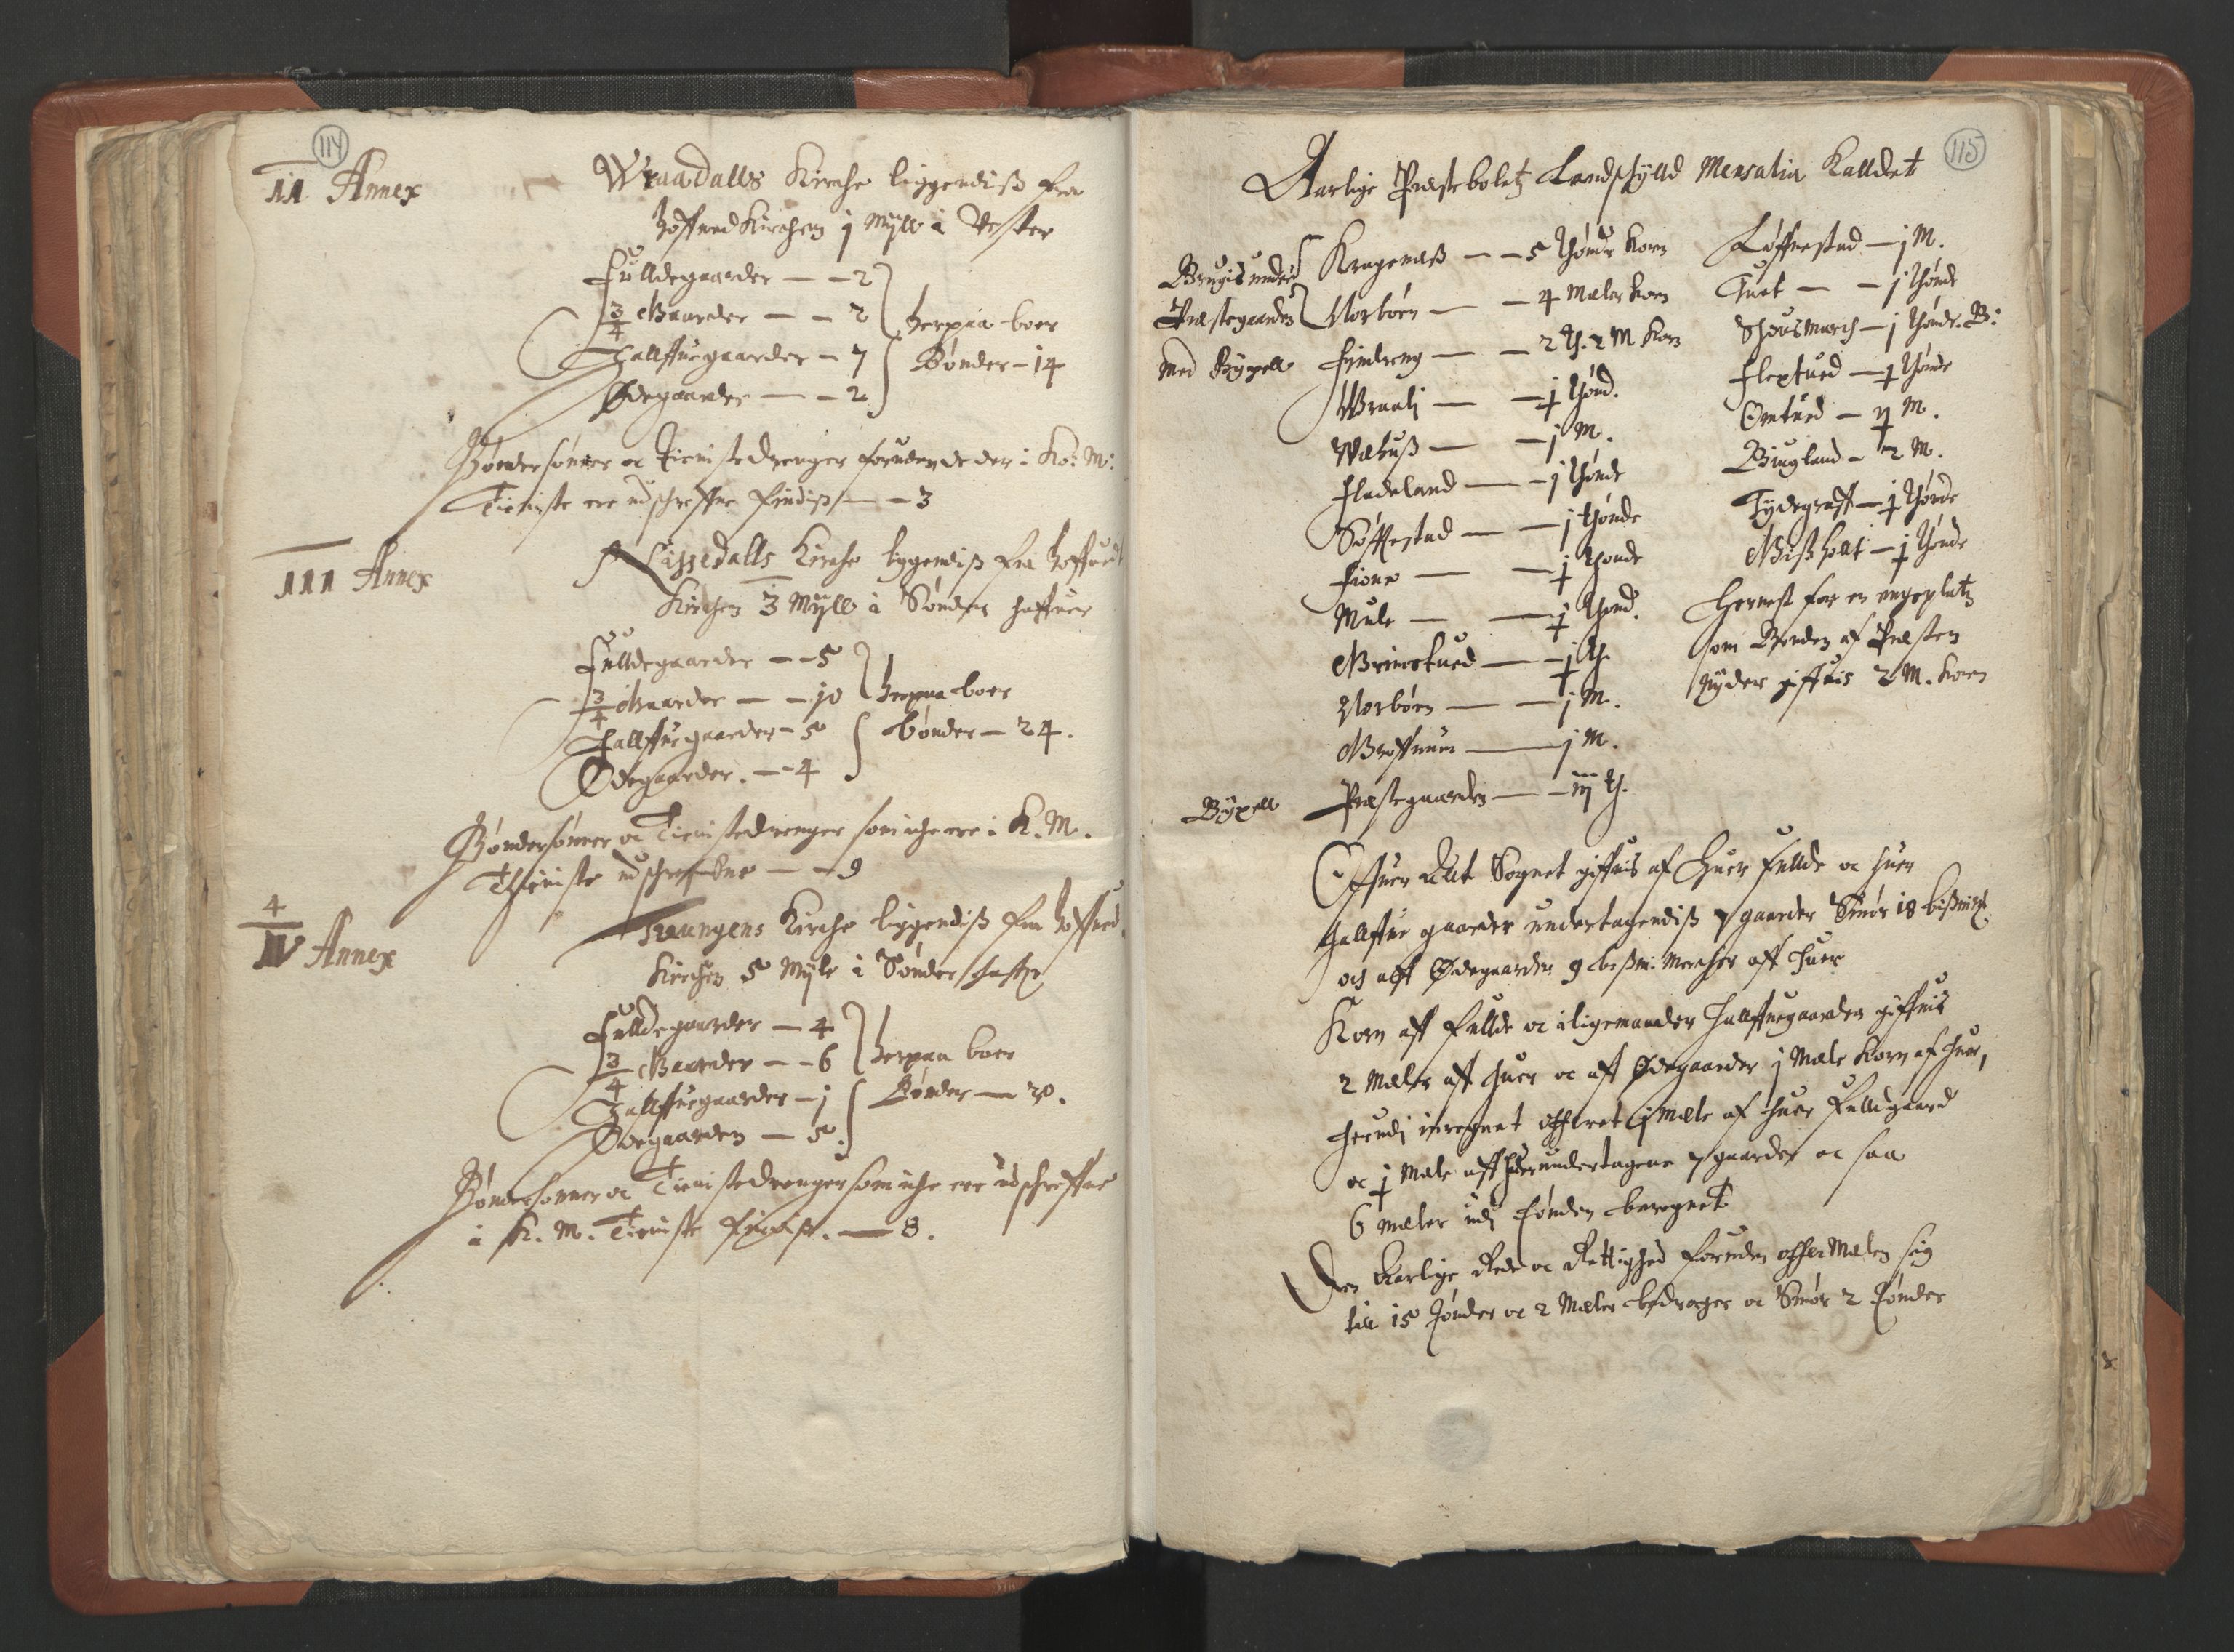 RA, Vicar's Census 1664-1666, no. 12: Øvre Telemark deanery, Nedre Telemark deanery and Bamble deanery, 1664-1666, p. 114-115